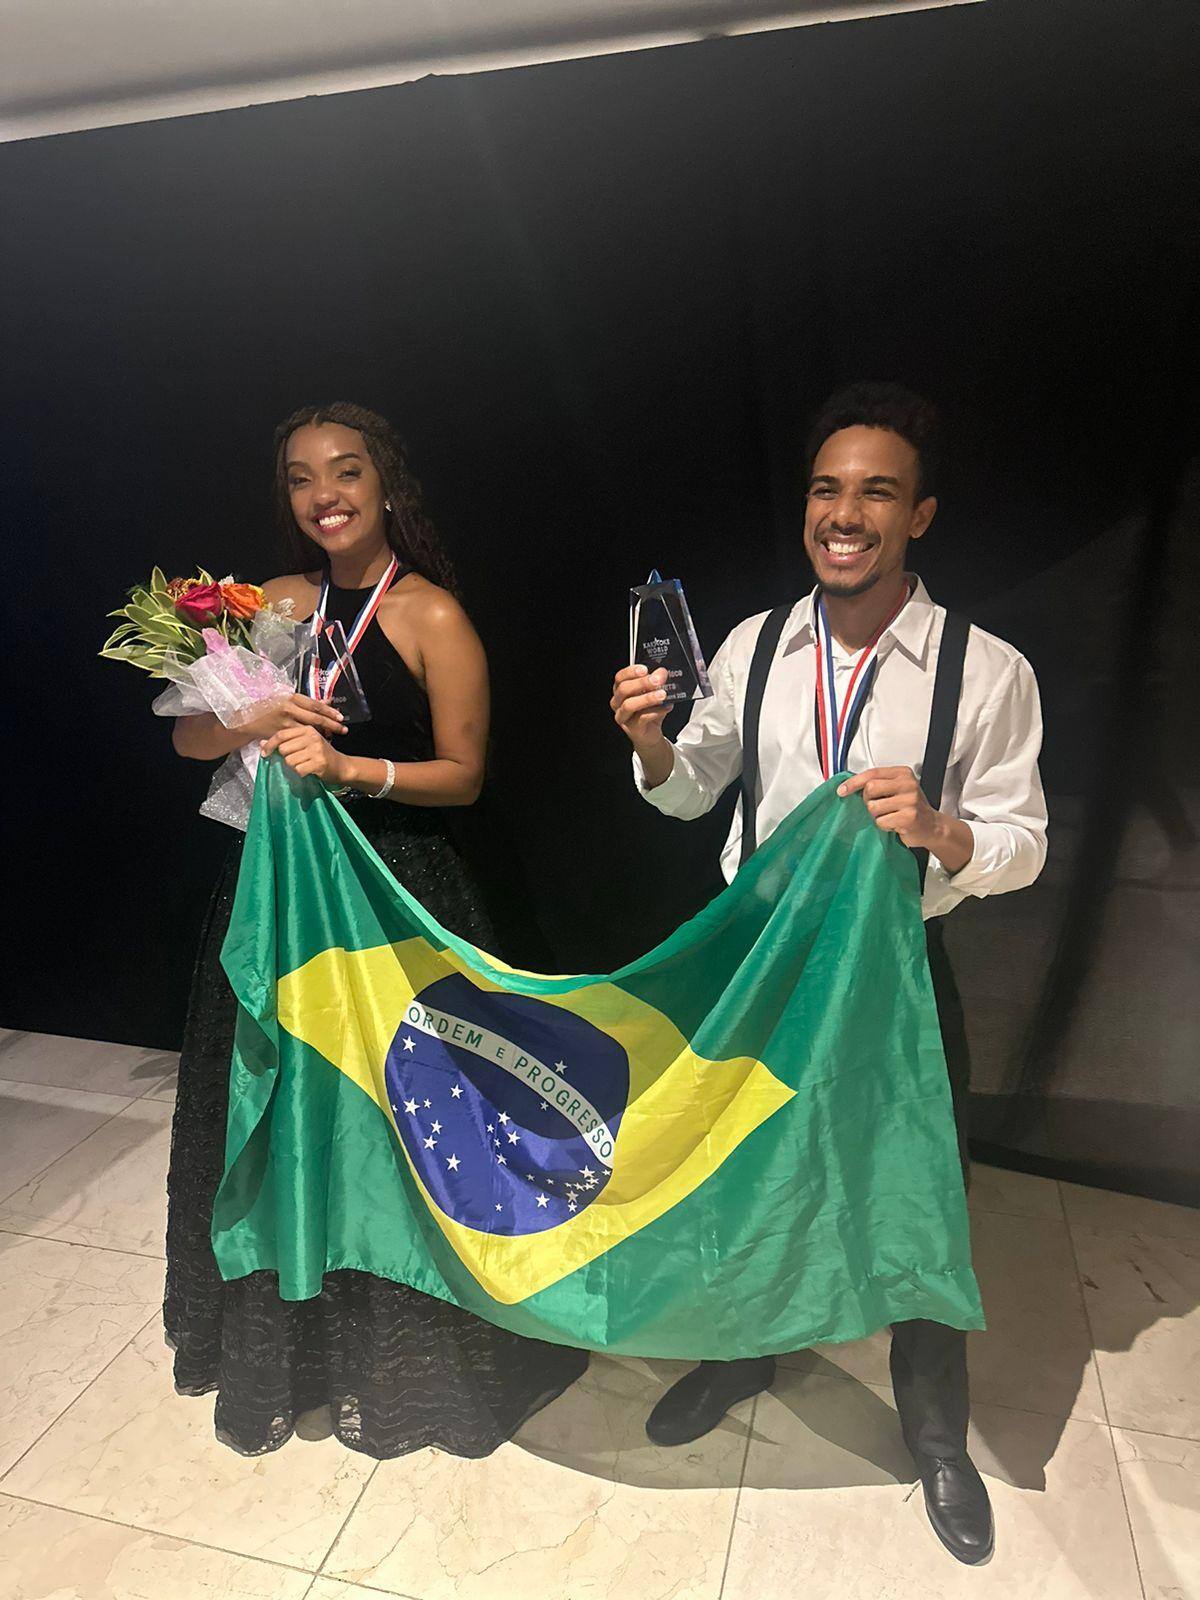 Sara Braz e Filipe Anacleto conquistaram o terceiro lugar no Karaokê World Championship (KWC) Panamá 2023